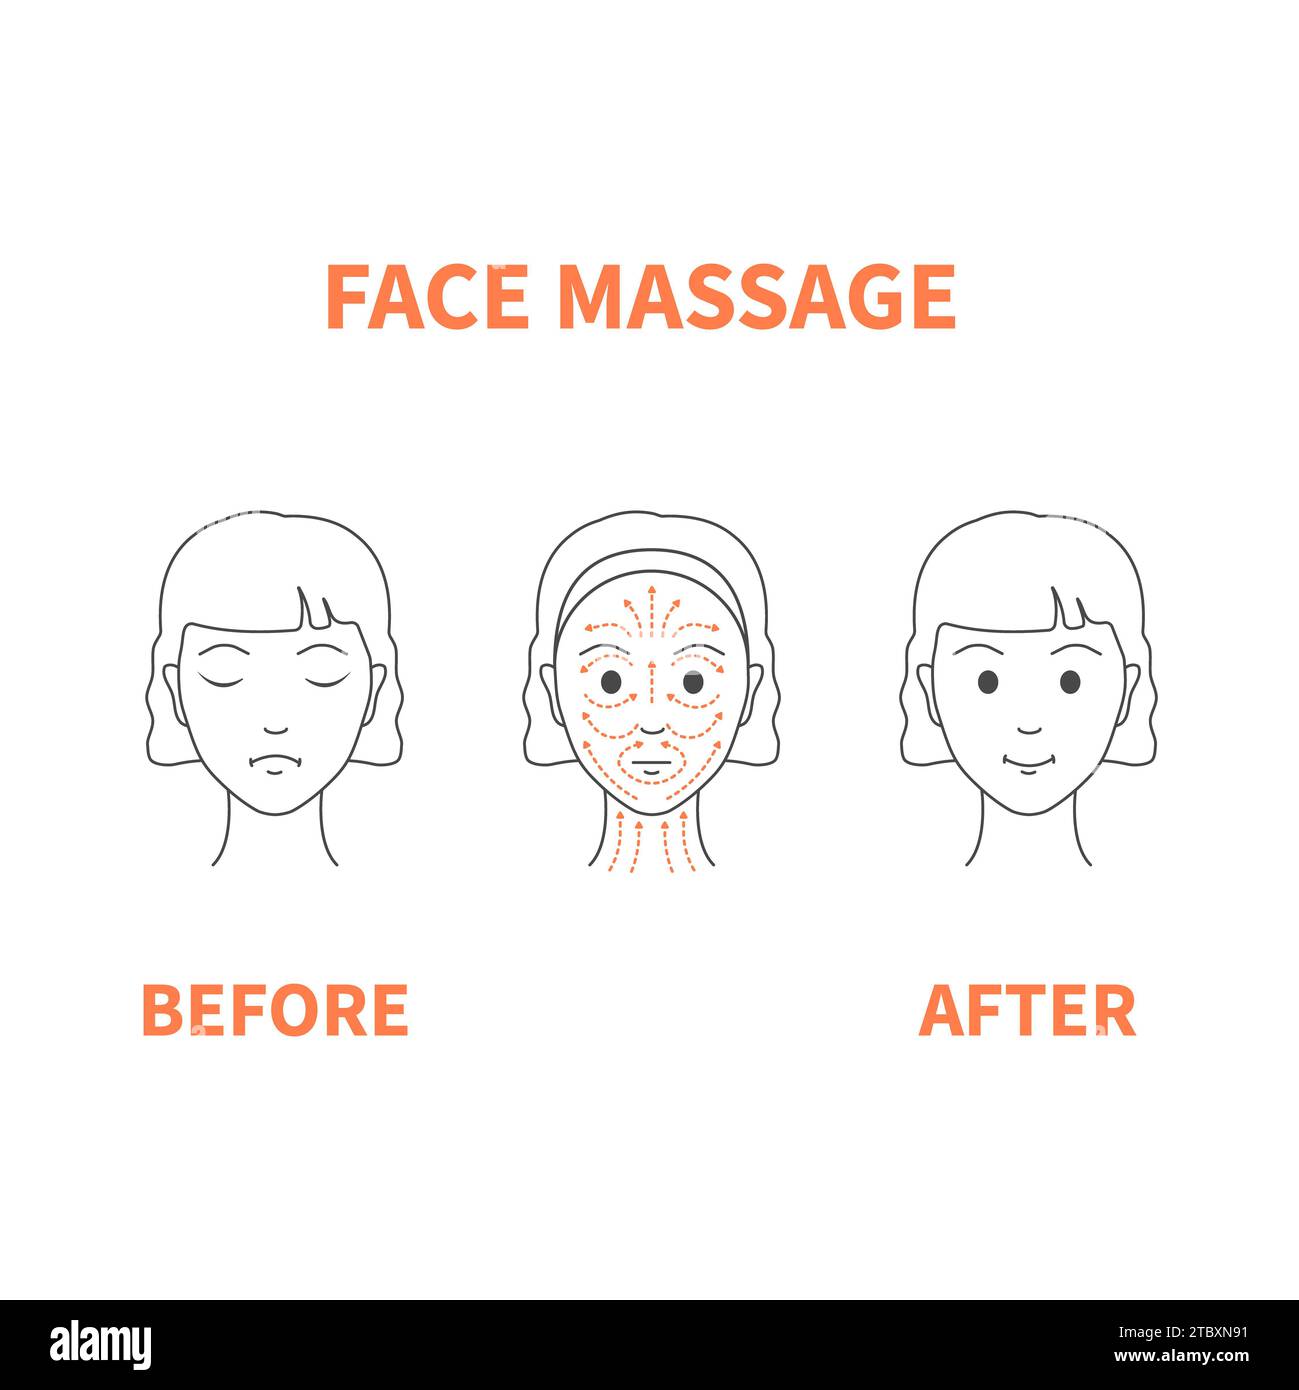 Face massage, conceptual illustration Stock Photo